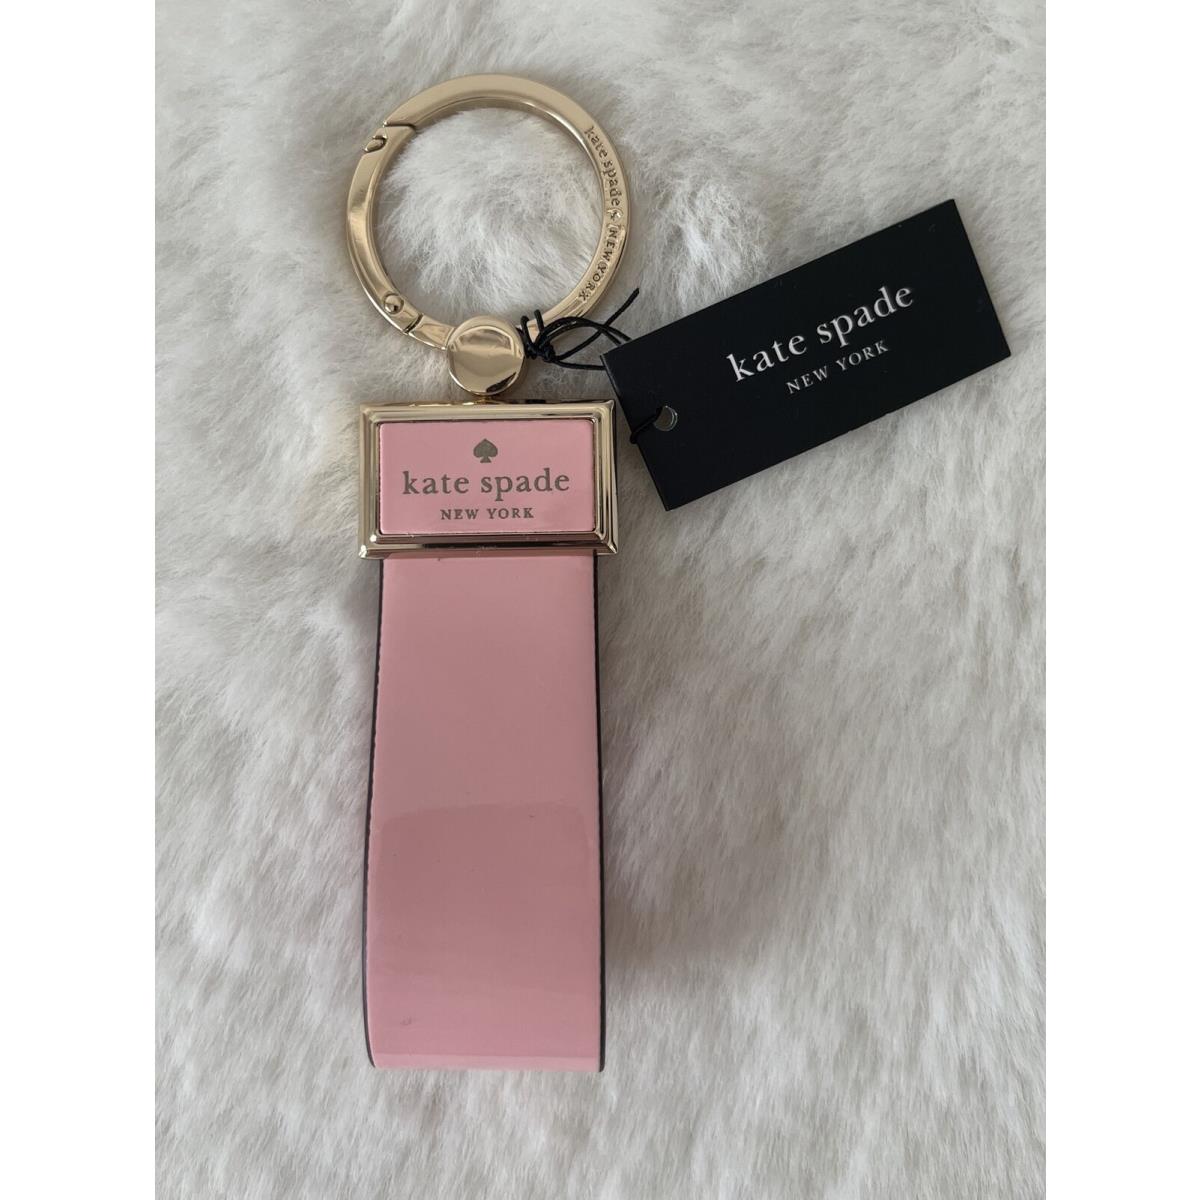 New Kate Spade Reegan Patent Keyfob Bag Charm Keychain Pink Tea Rose